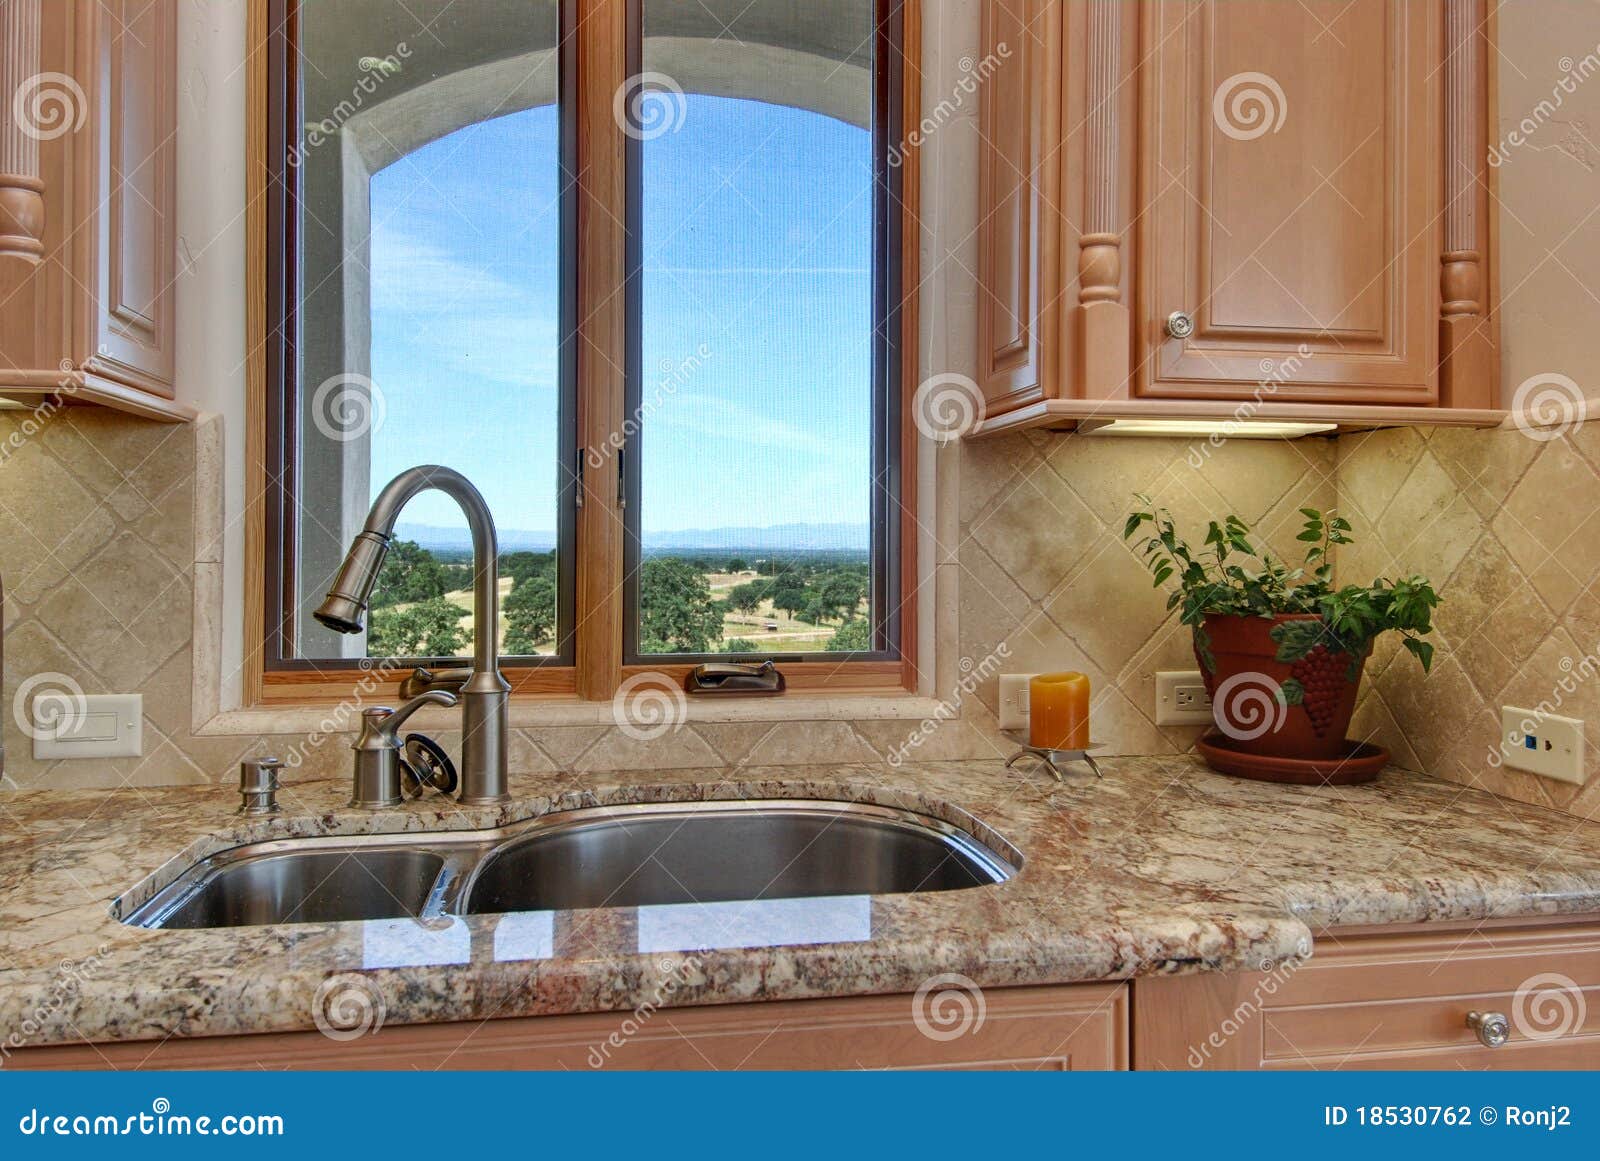 Stylish Kitchen Window View Stock Photo Image of county 